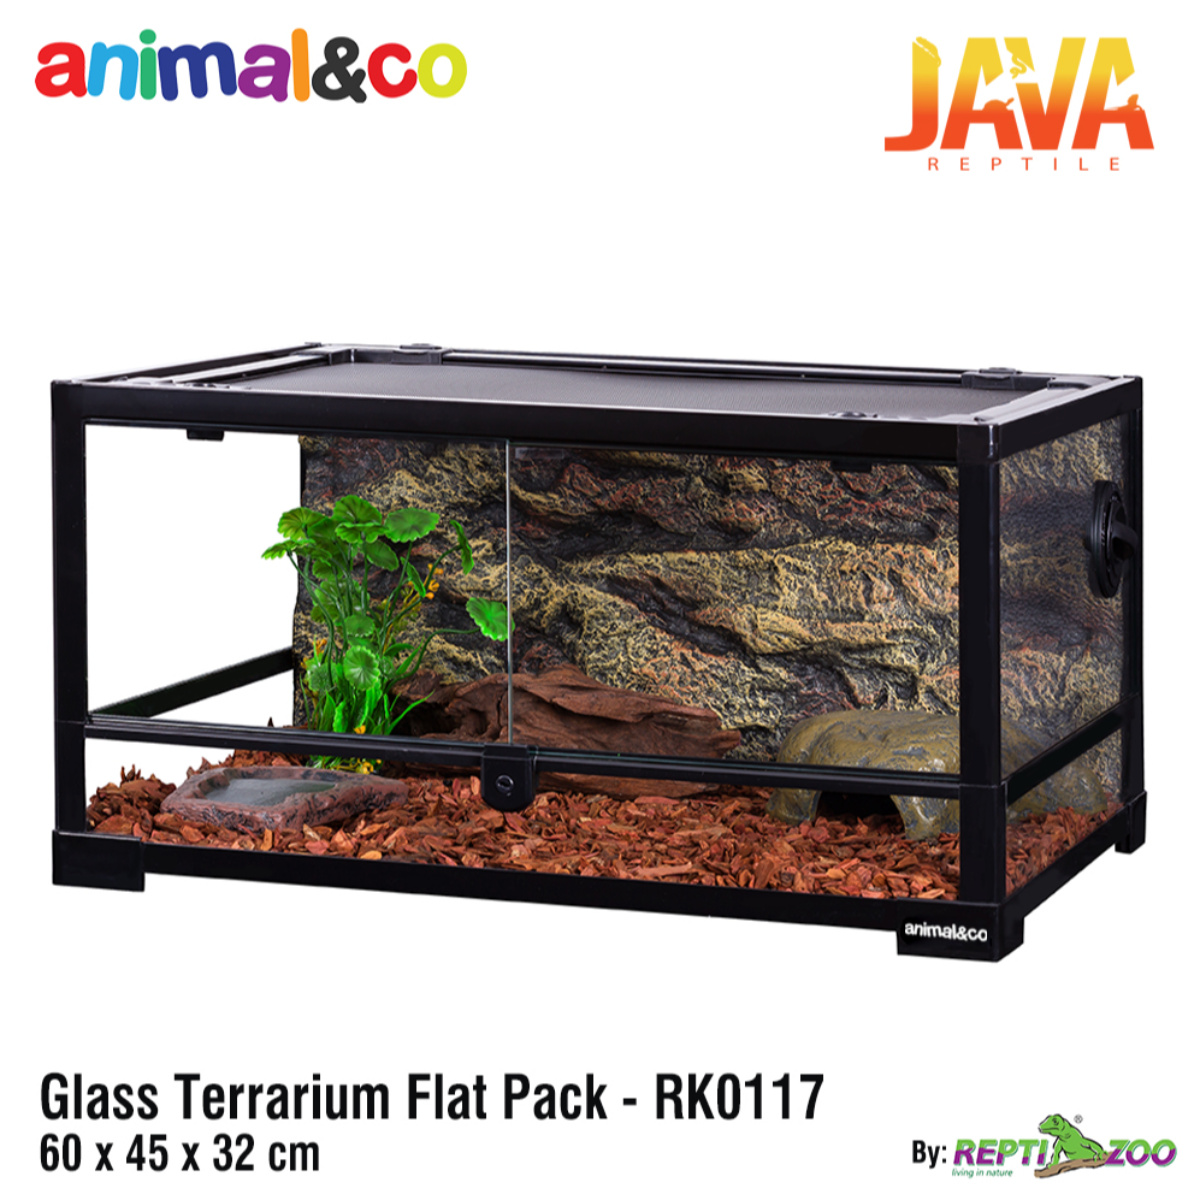 Animal&co Glass Terrarium 60x45x32cm by Reptizoo RK0117